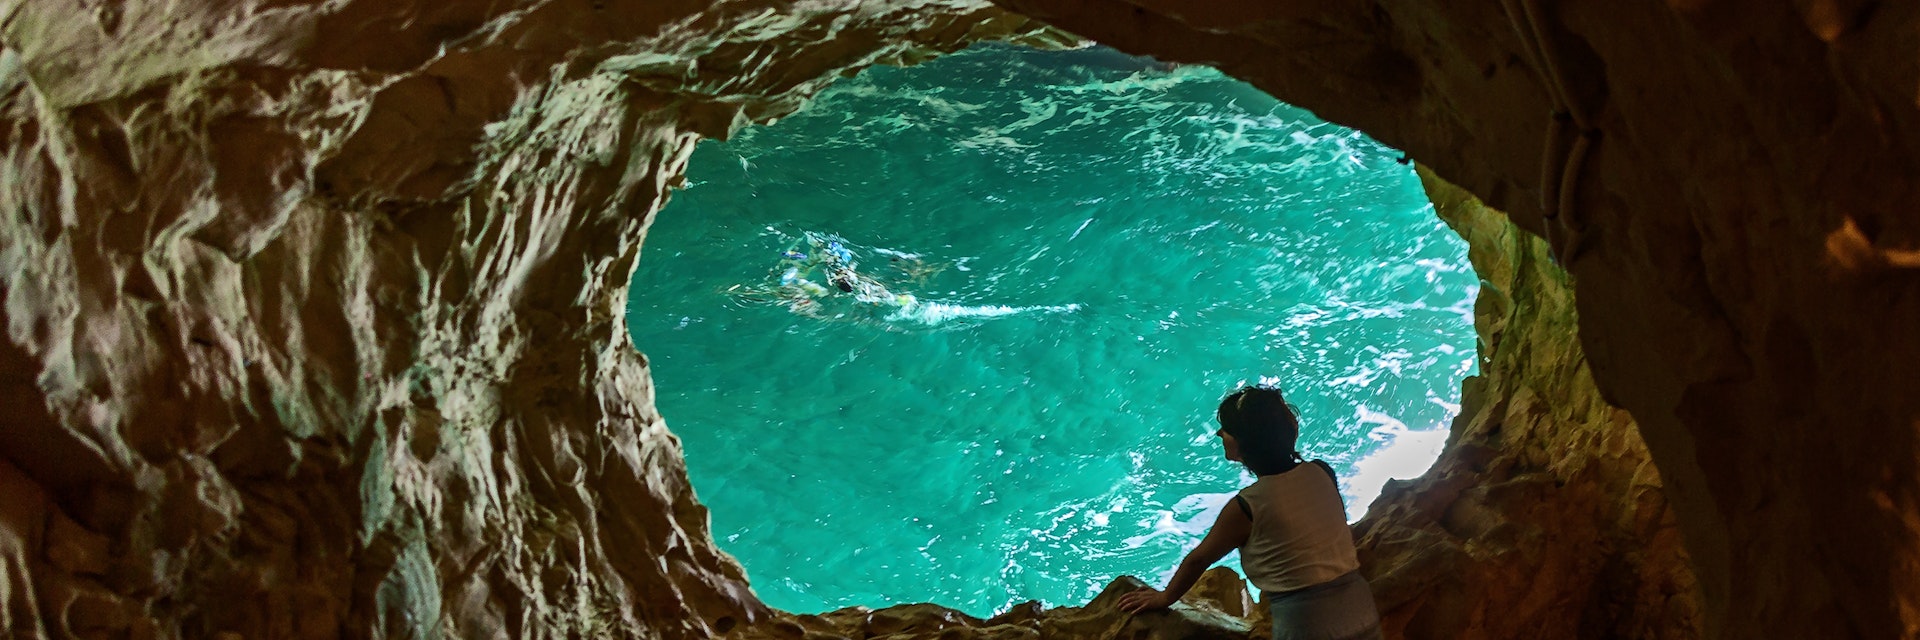 A sea cave at Rosh Hanikra, Israel.